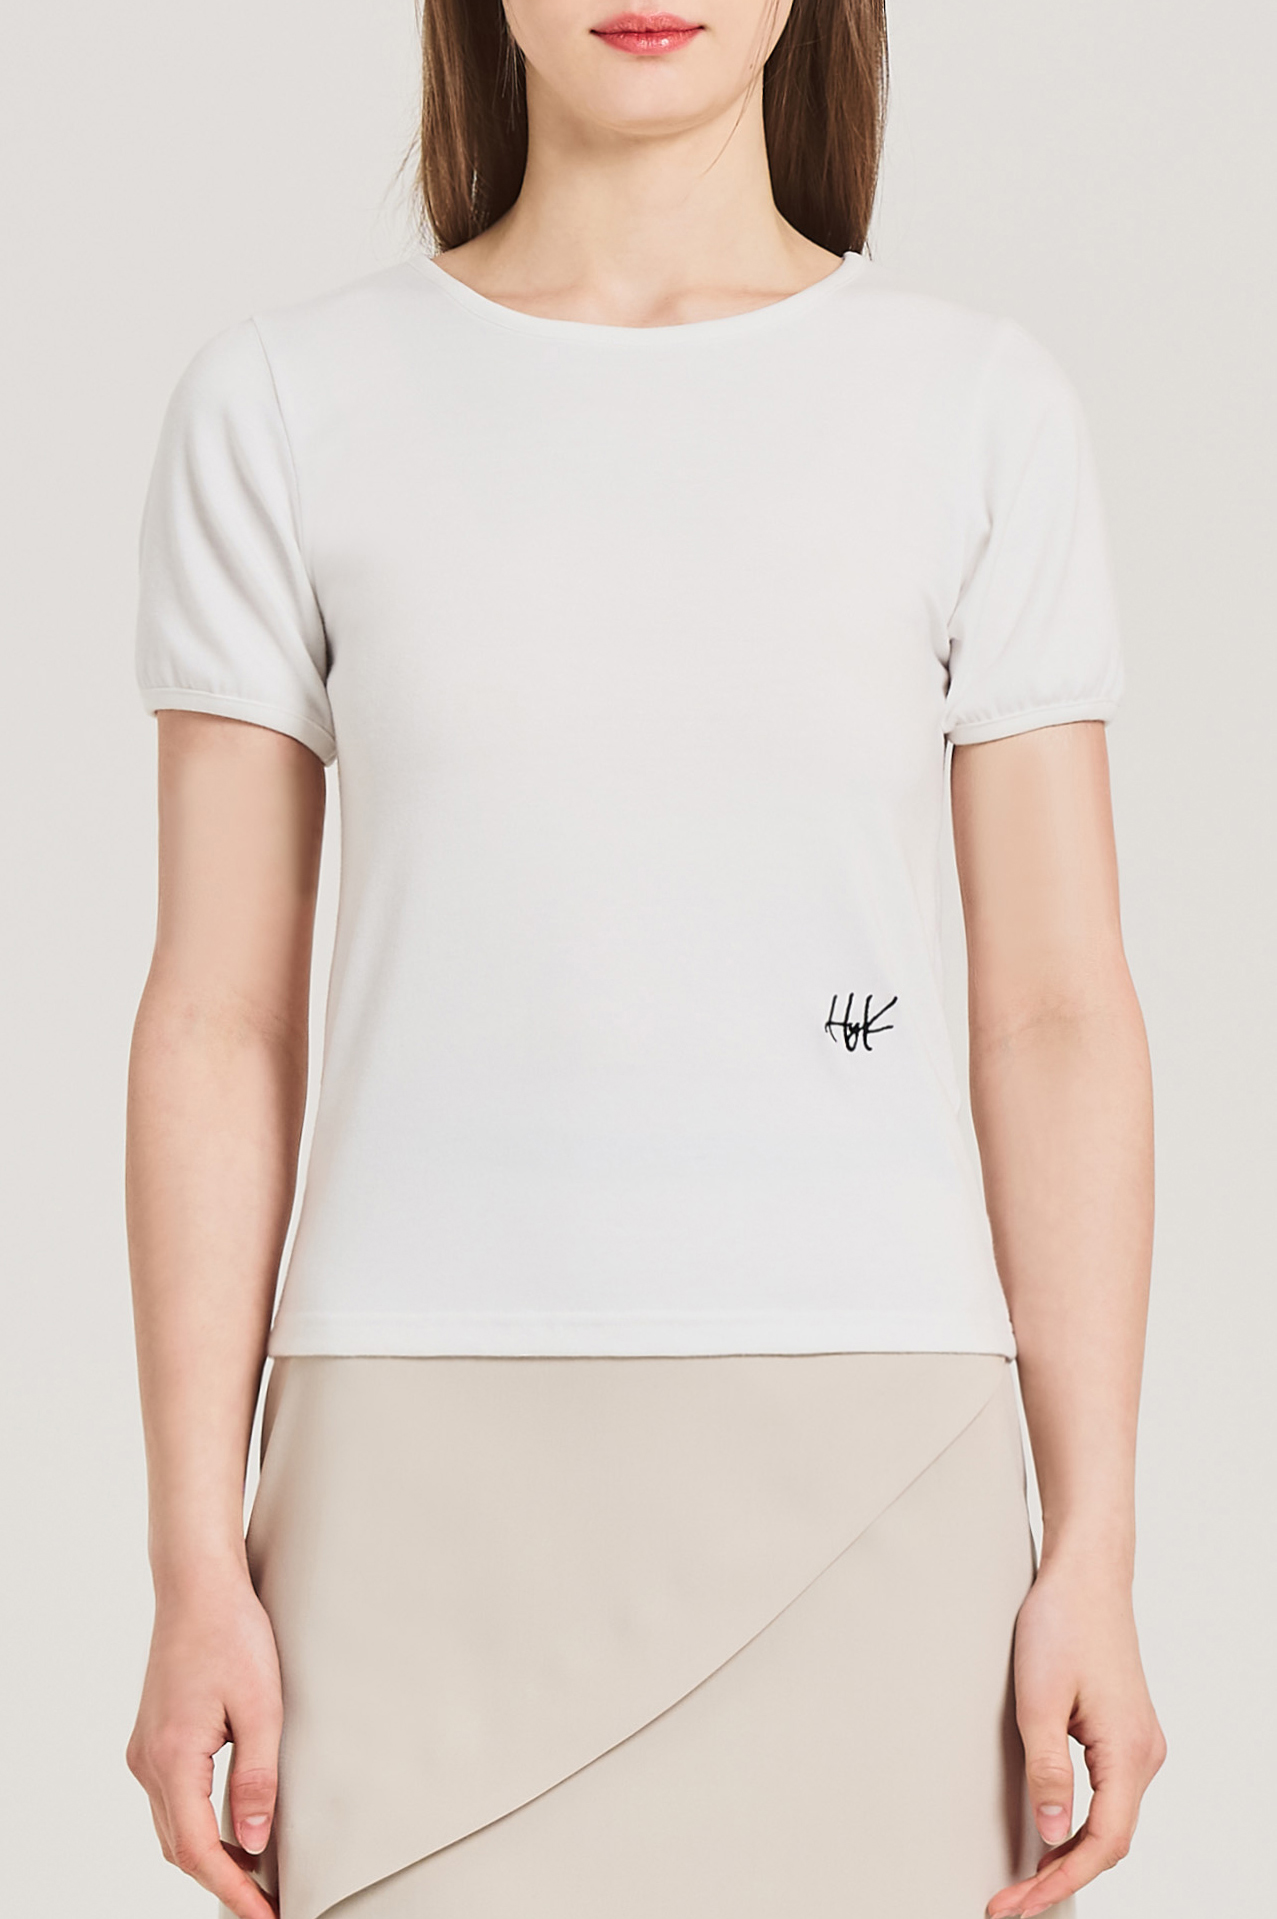 LOGO T-SHIRT-white, 혜영킴, HYEYEONG KIM designer brand